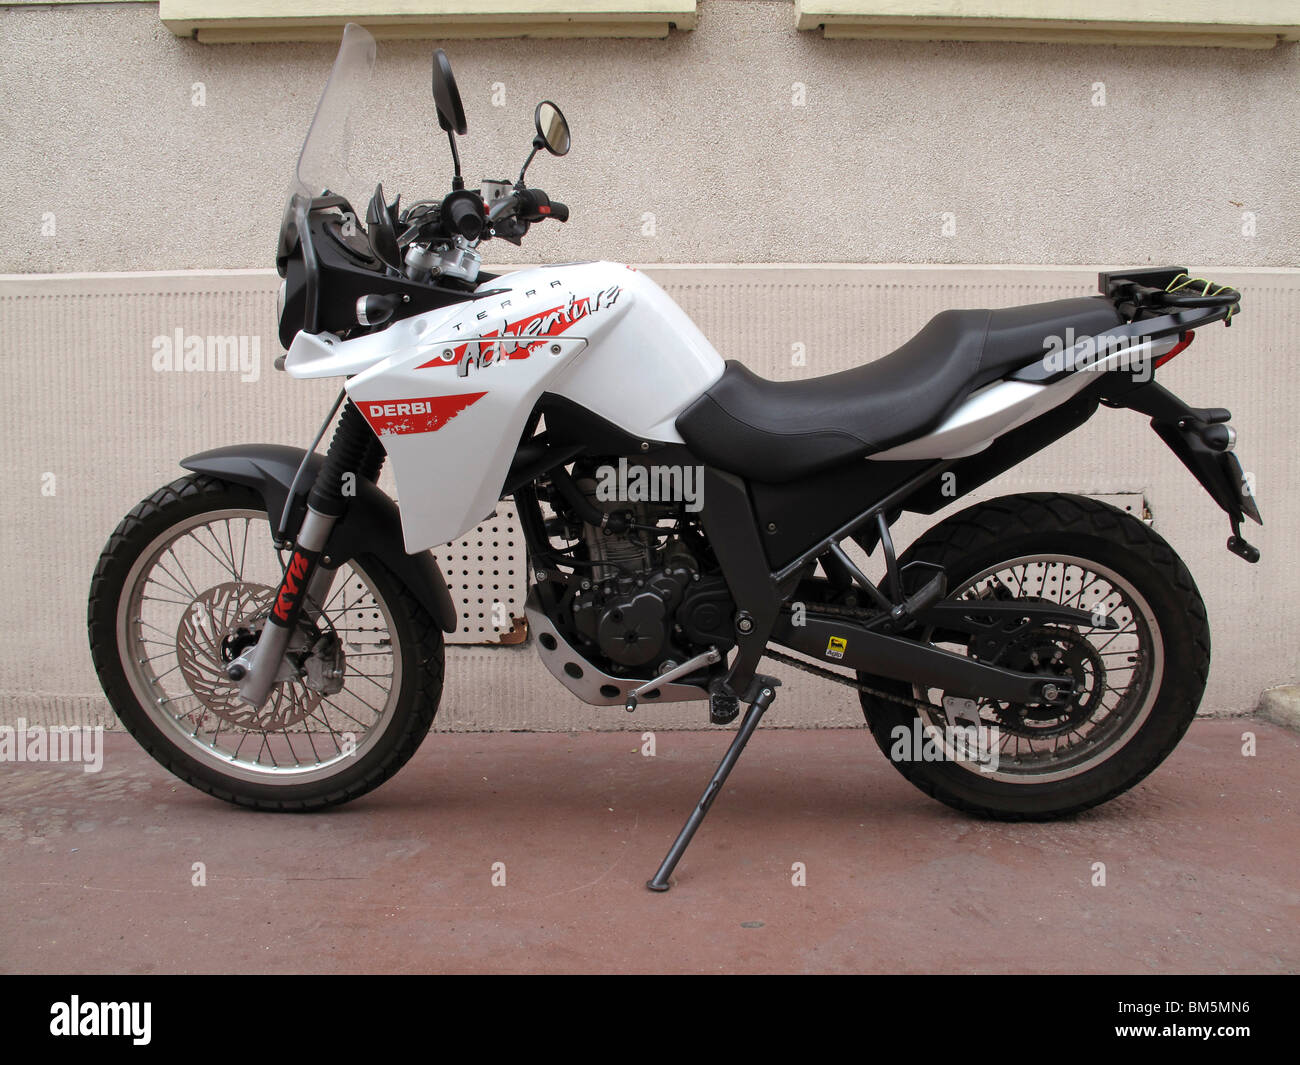 Derbi,Terra Adventure,125cc motorcycle made in Spain Stock Photo